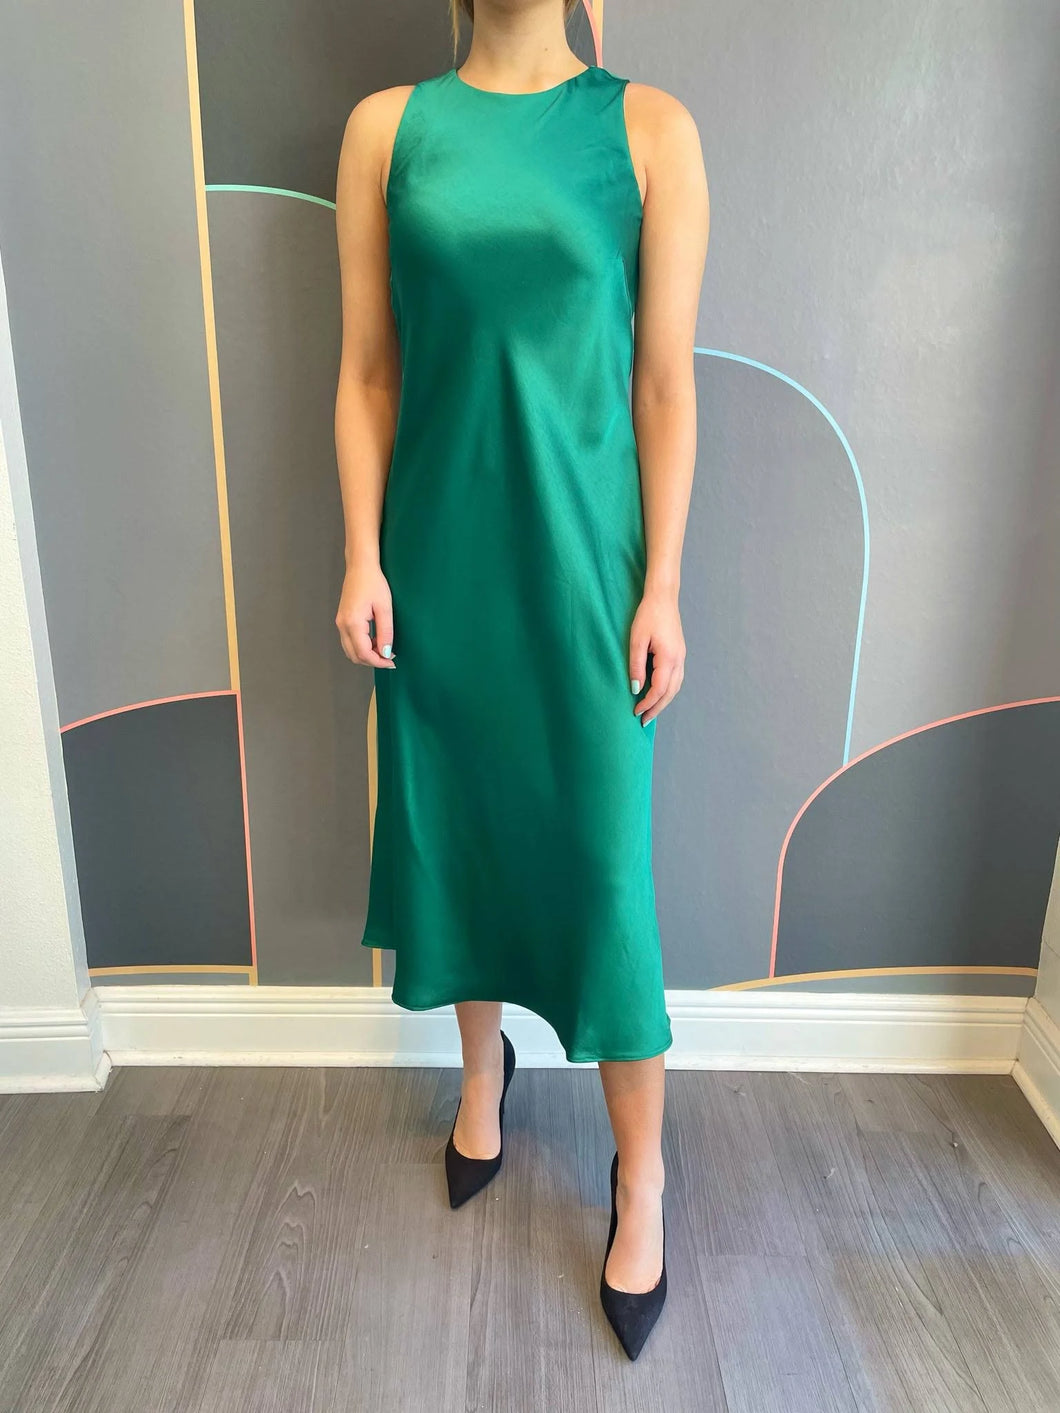 Shiv Bias Dress - Emerald